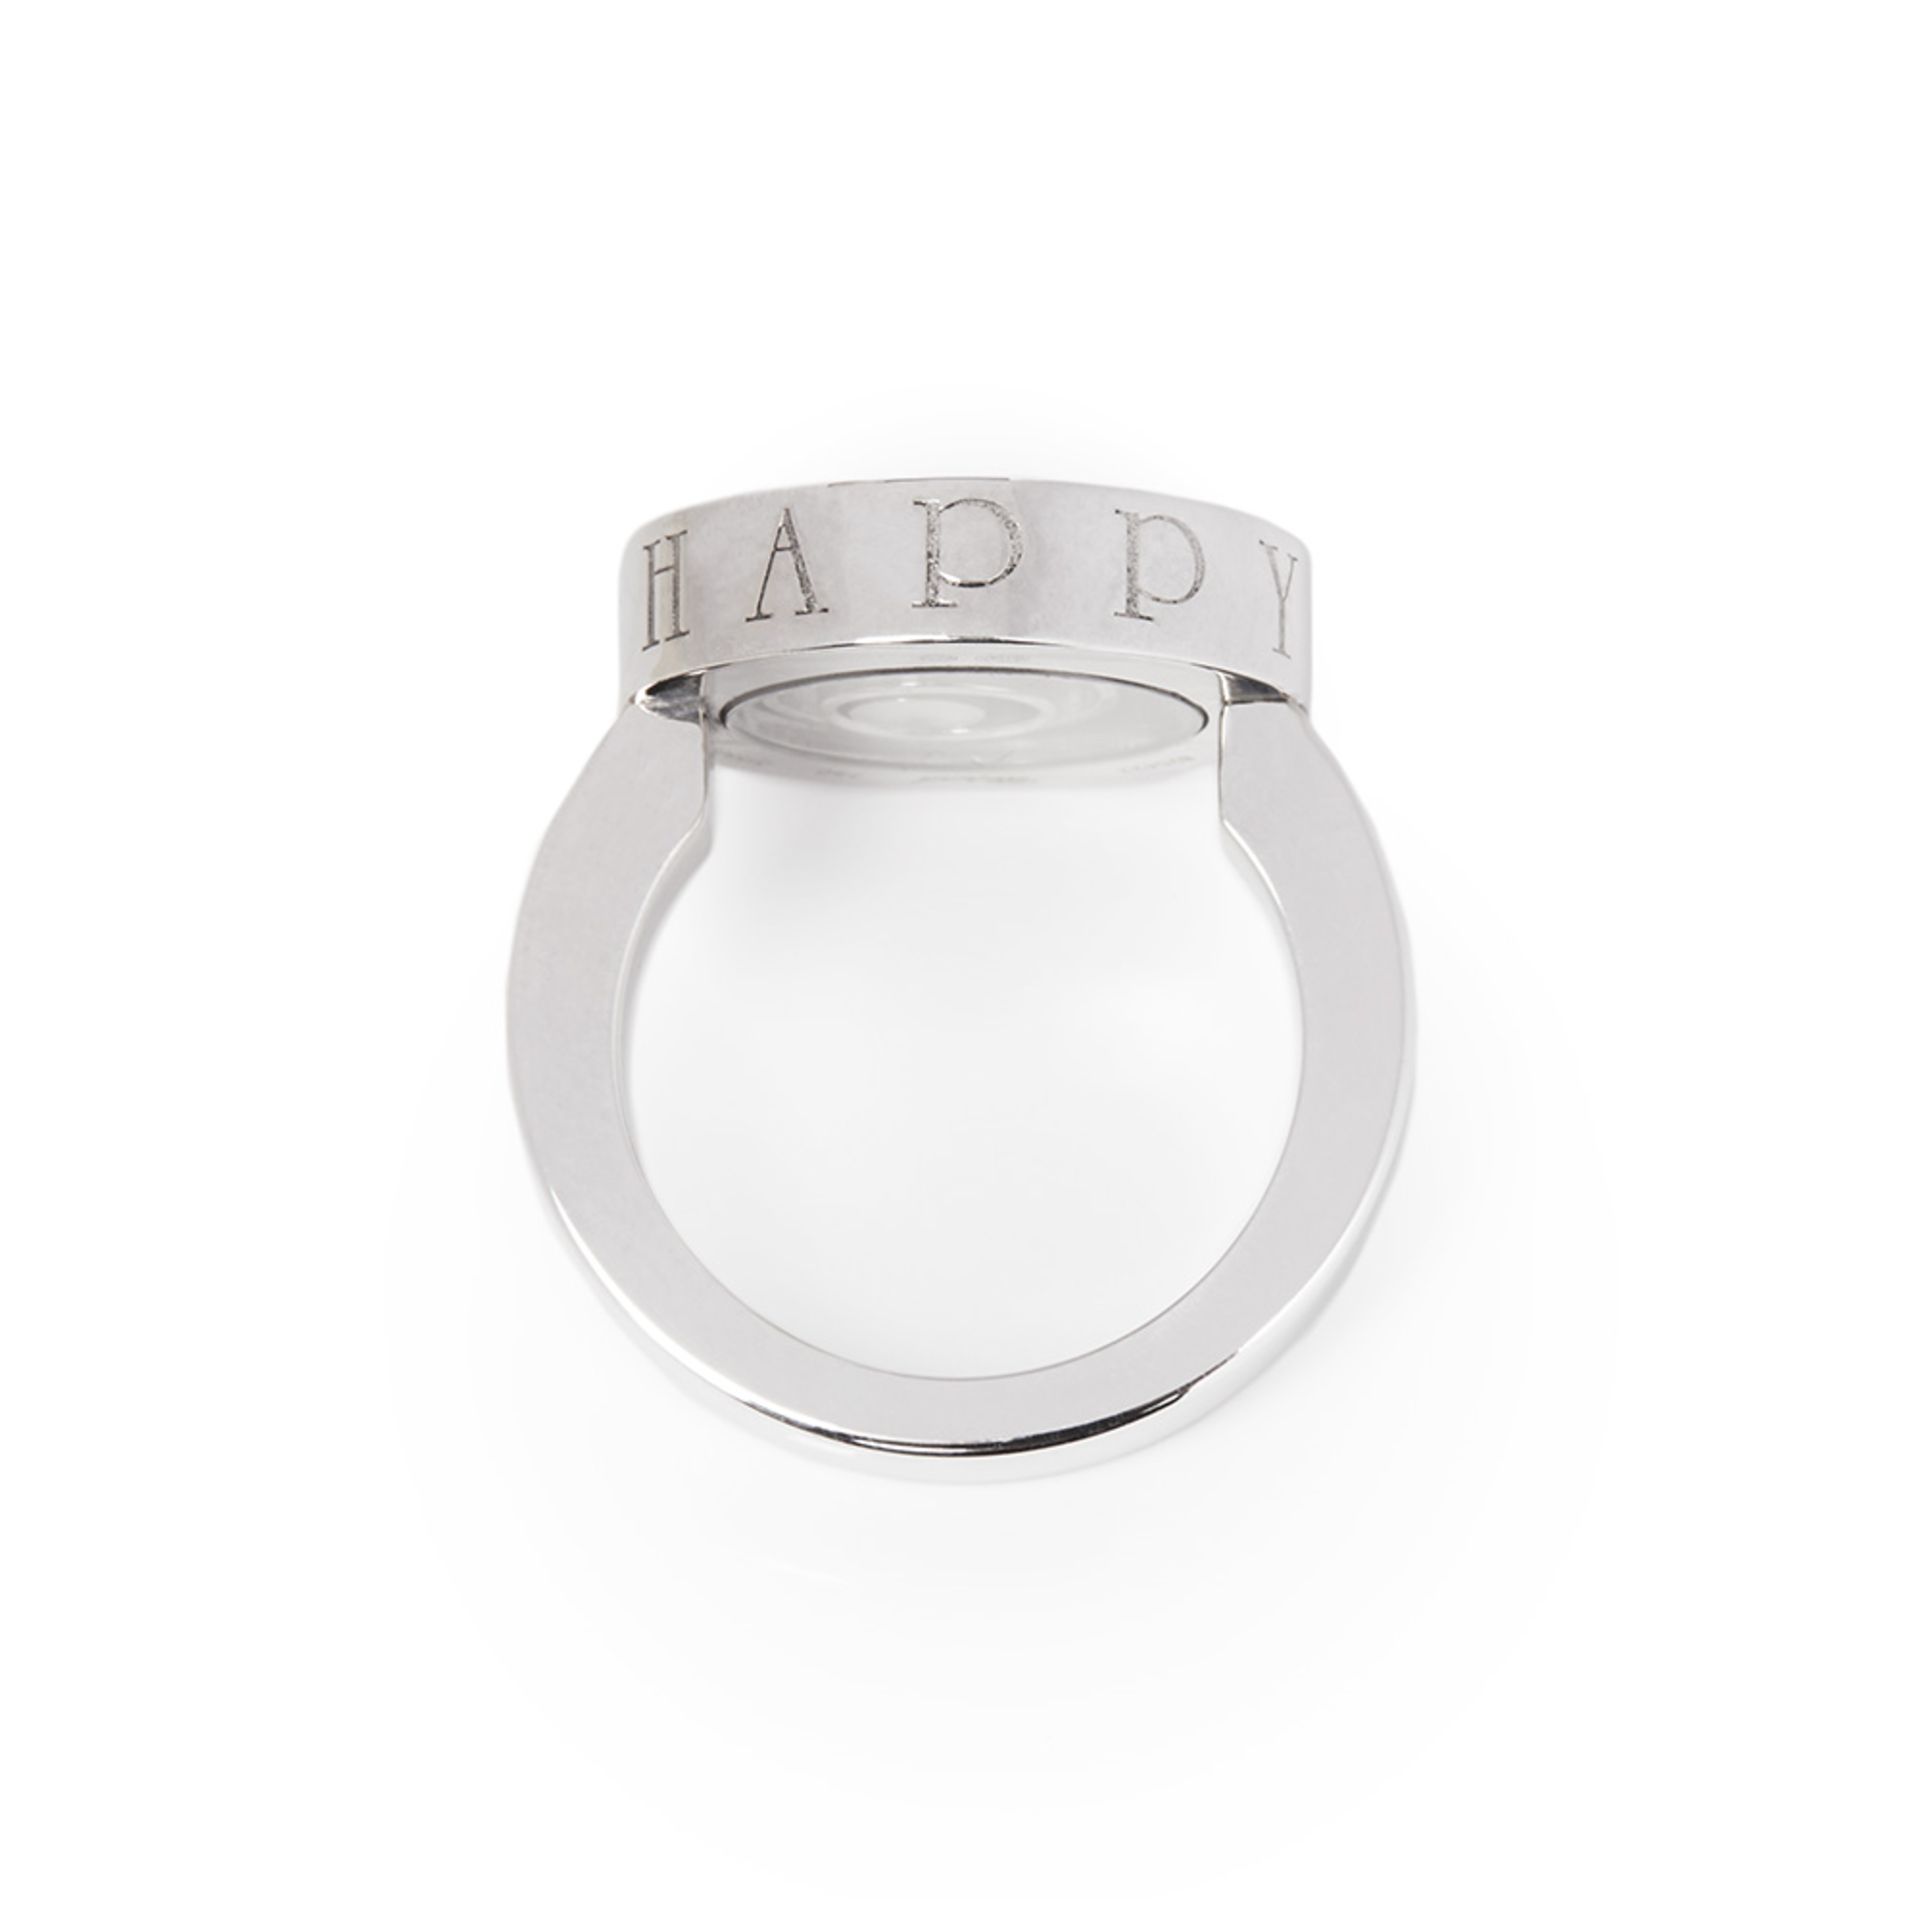 Chopard 18k White Gold Happy Spirit Ring - Image 6 of 10